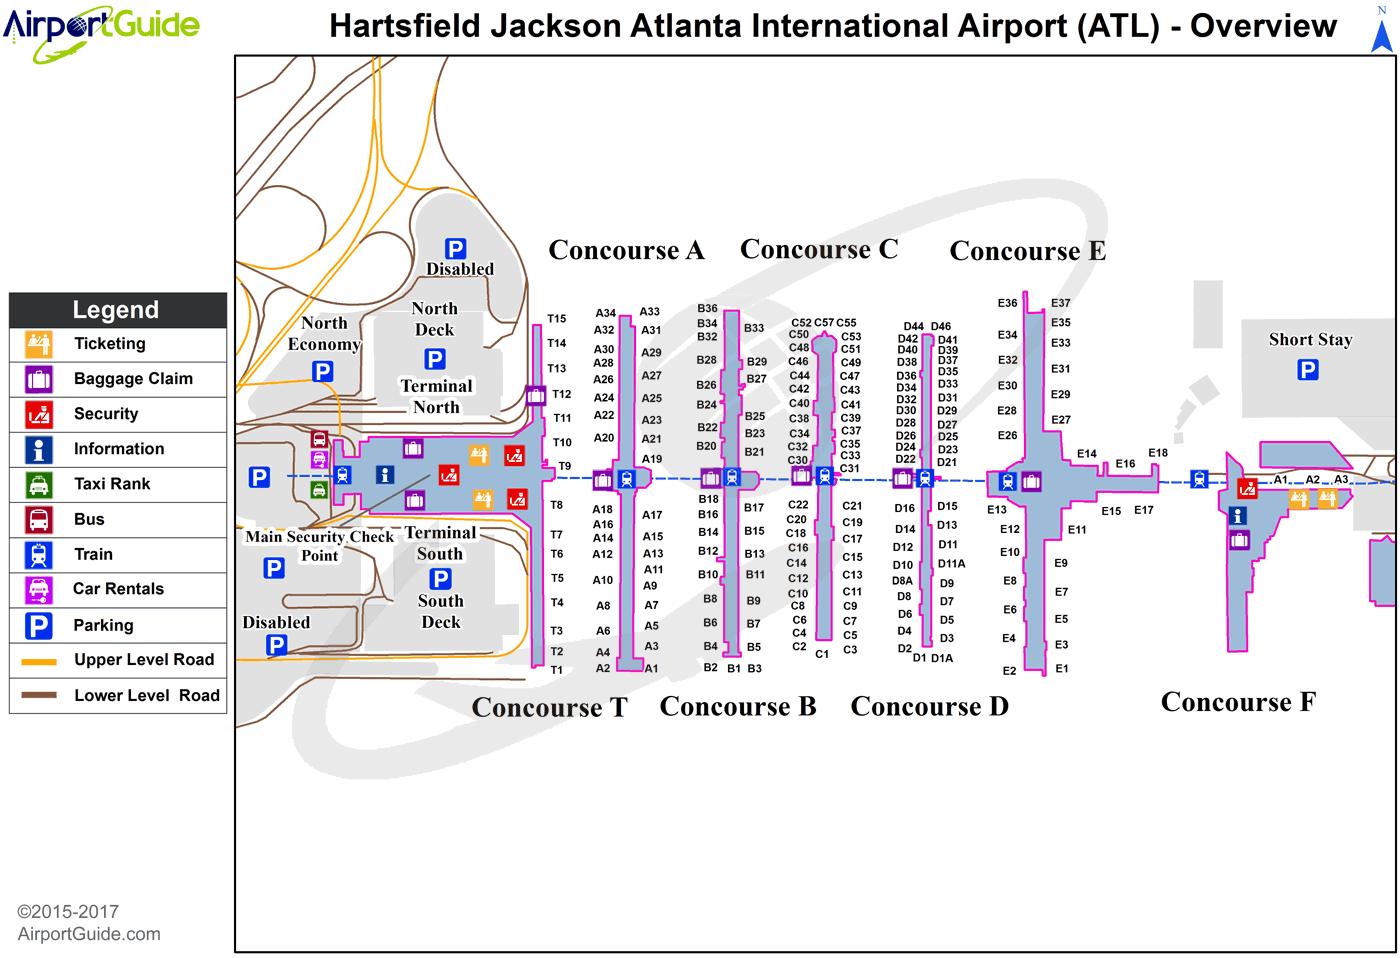 Atlanta Airport Concourse C Map 